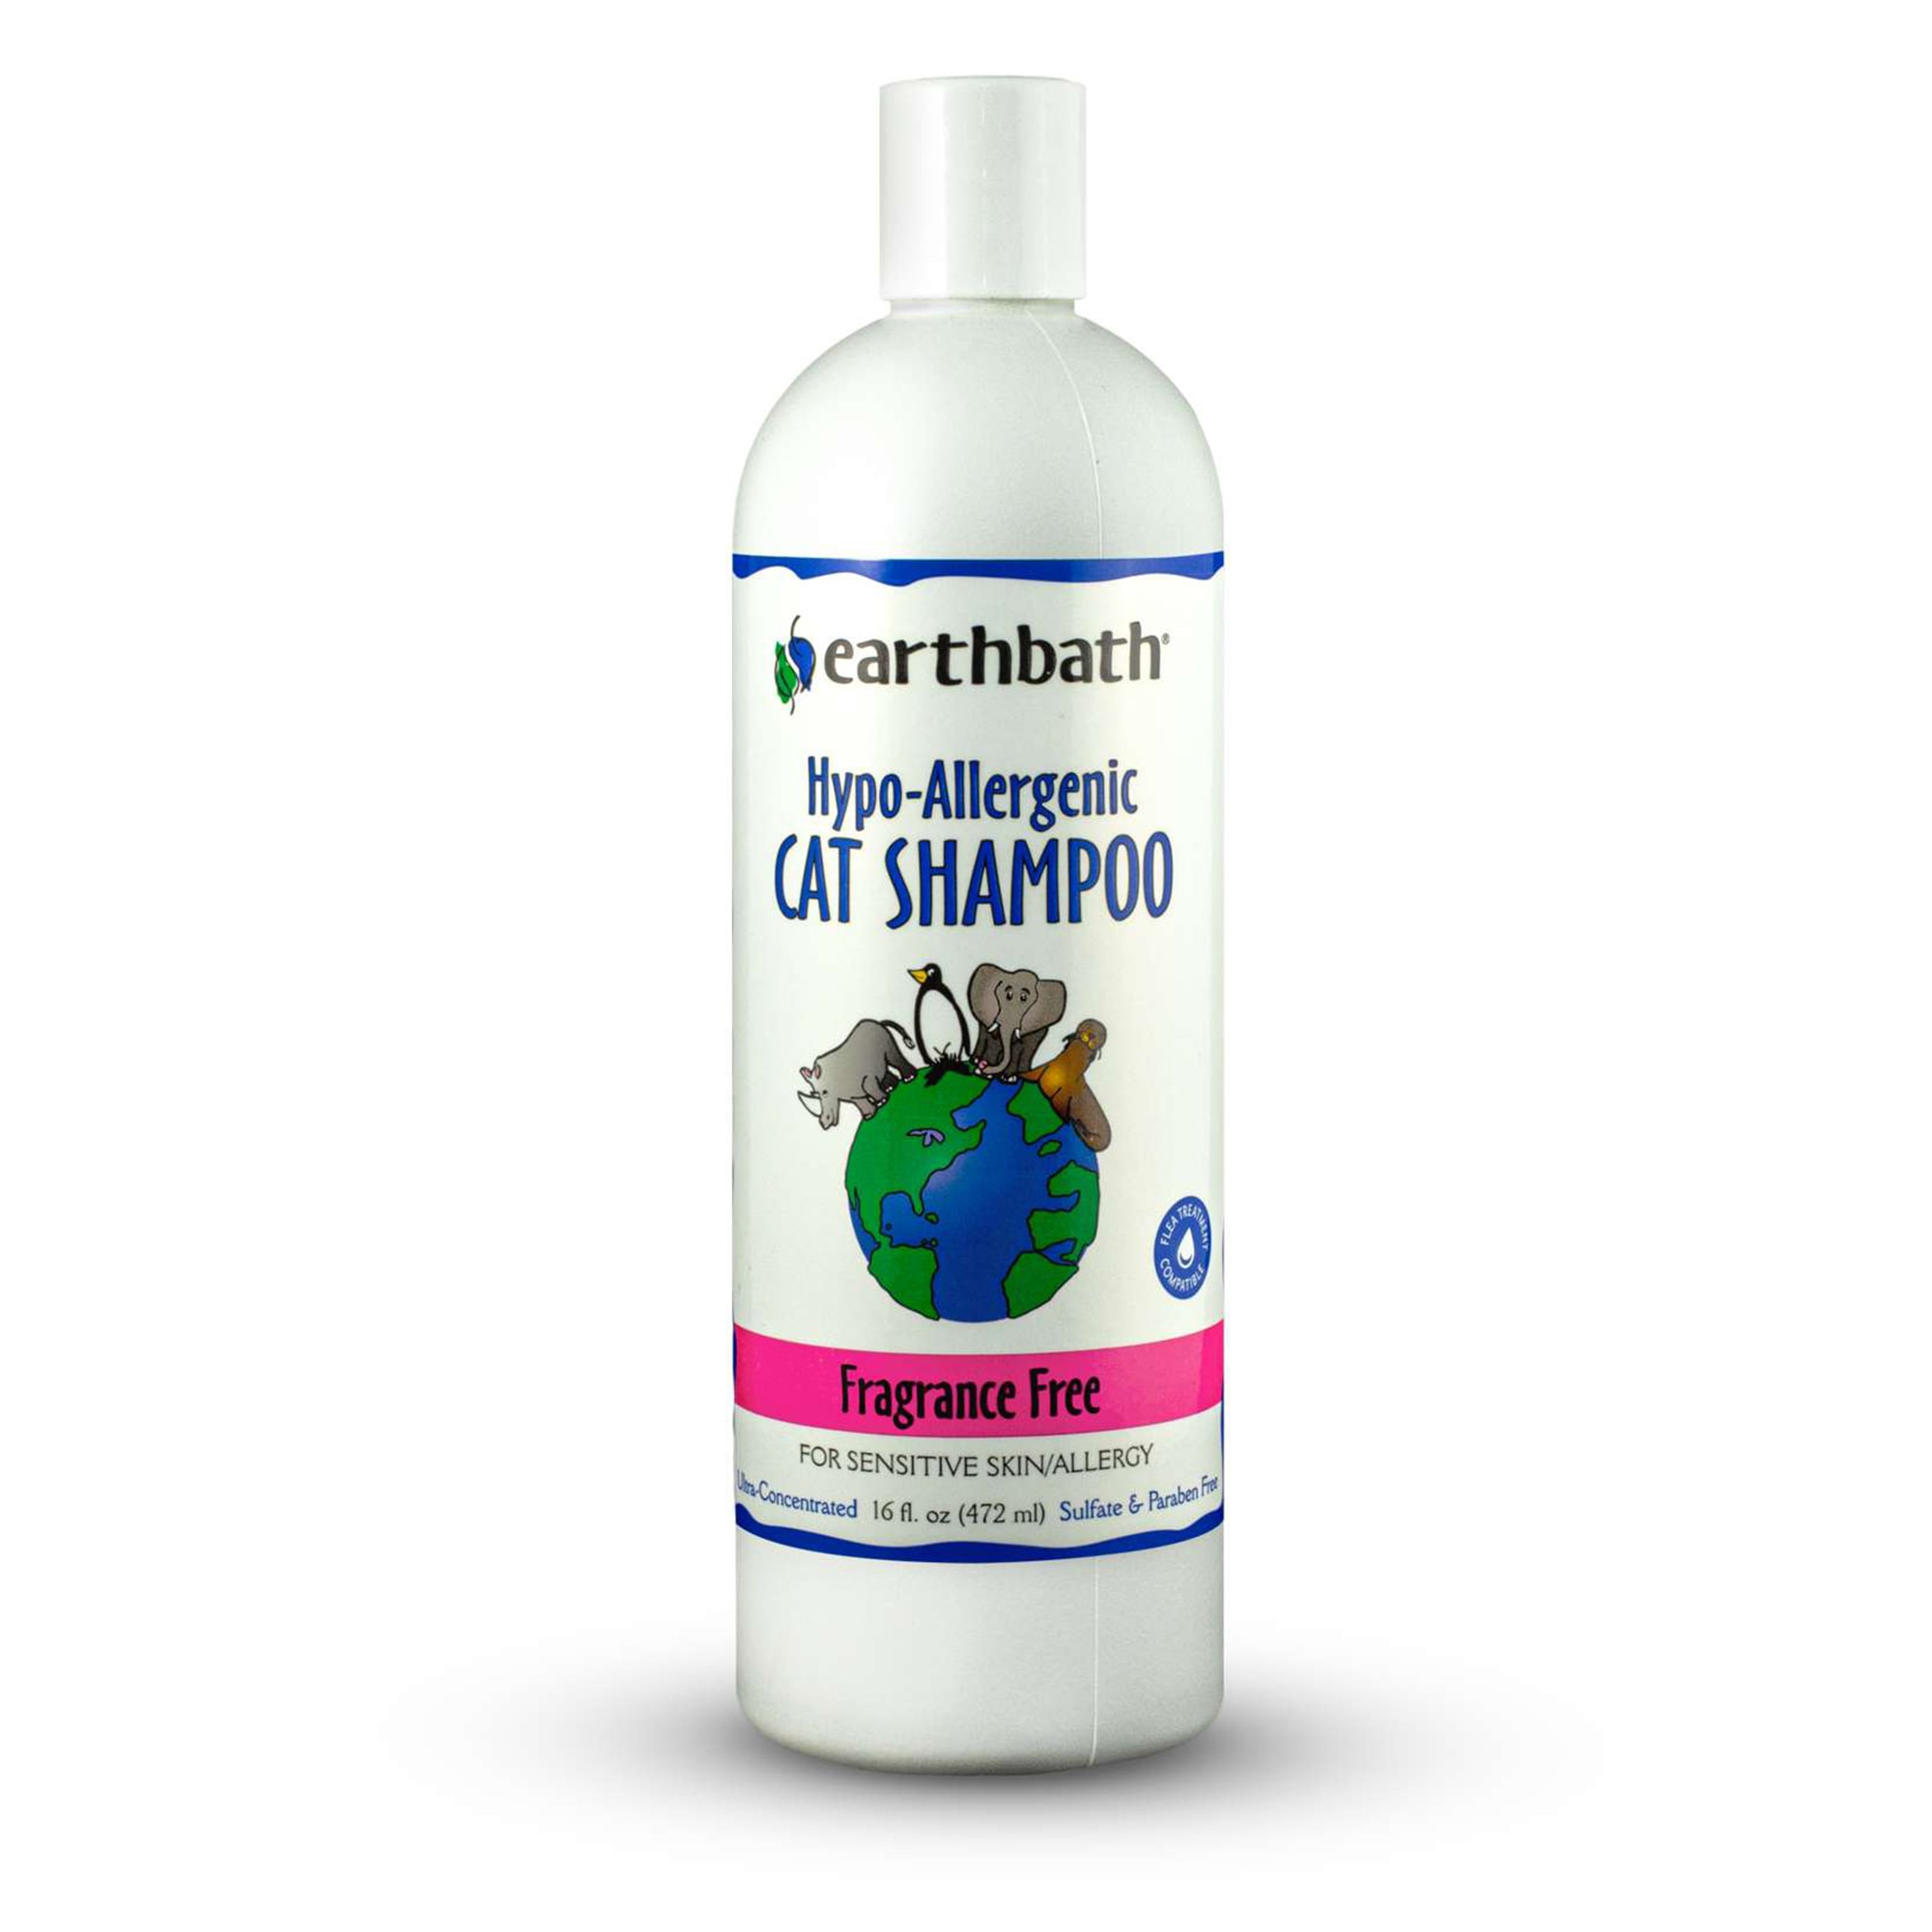 earthbath dog shampoo australia